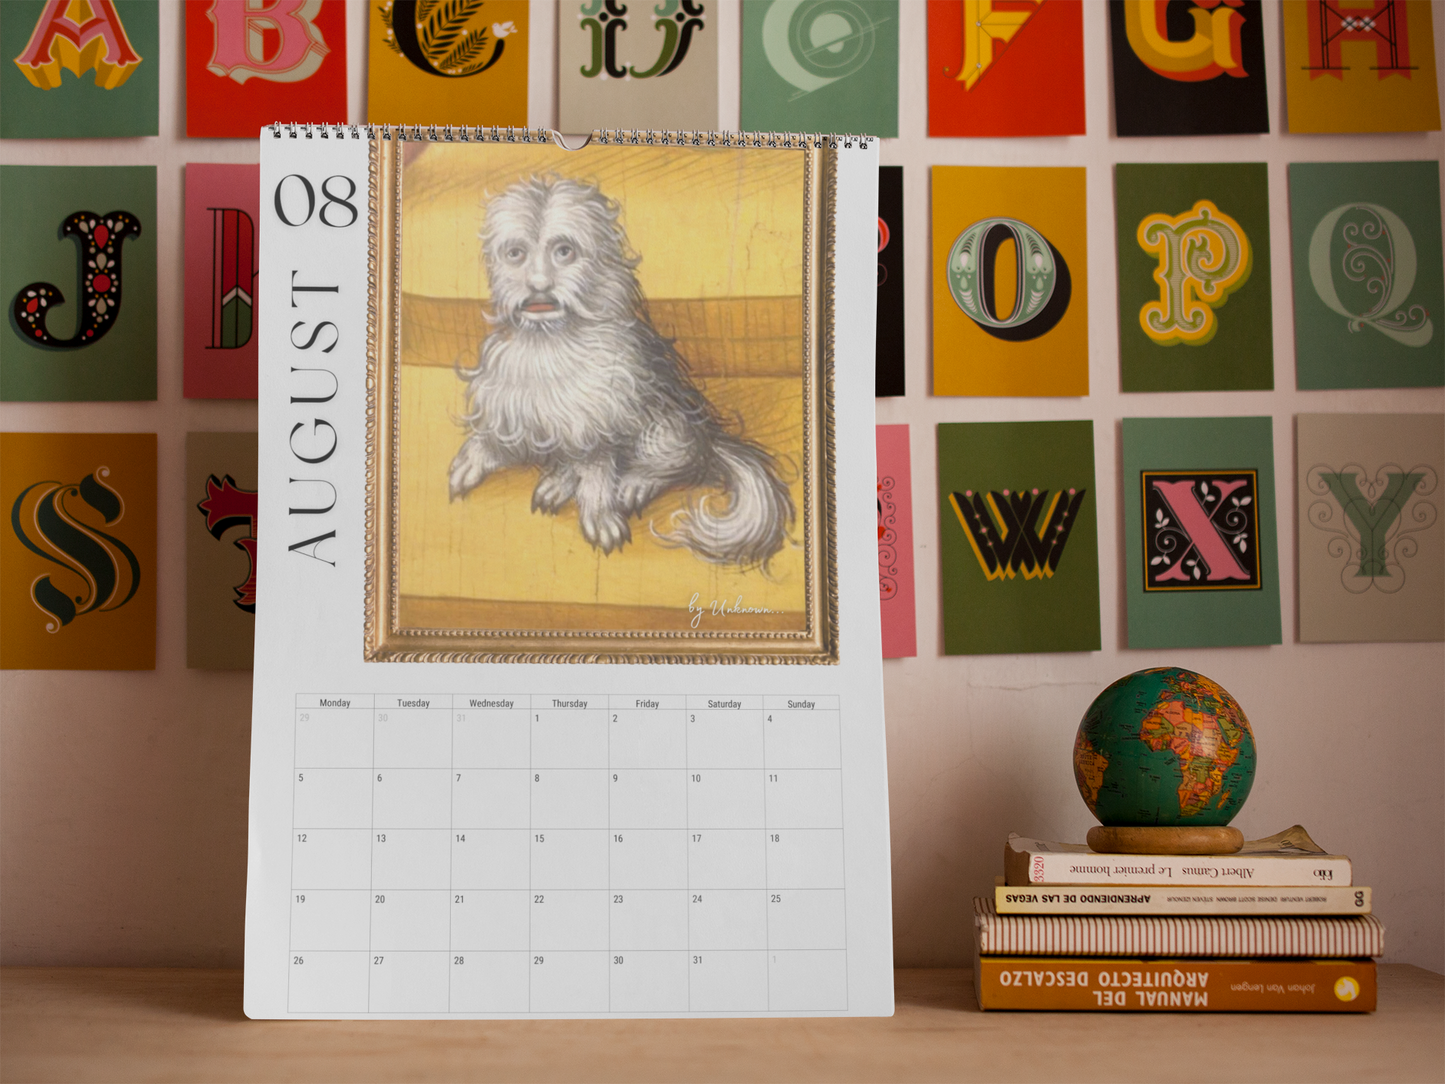 Cursed Dogs Portraits in Renaissance 2024 Wall Calendar